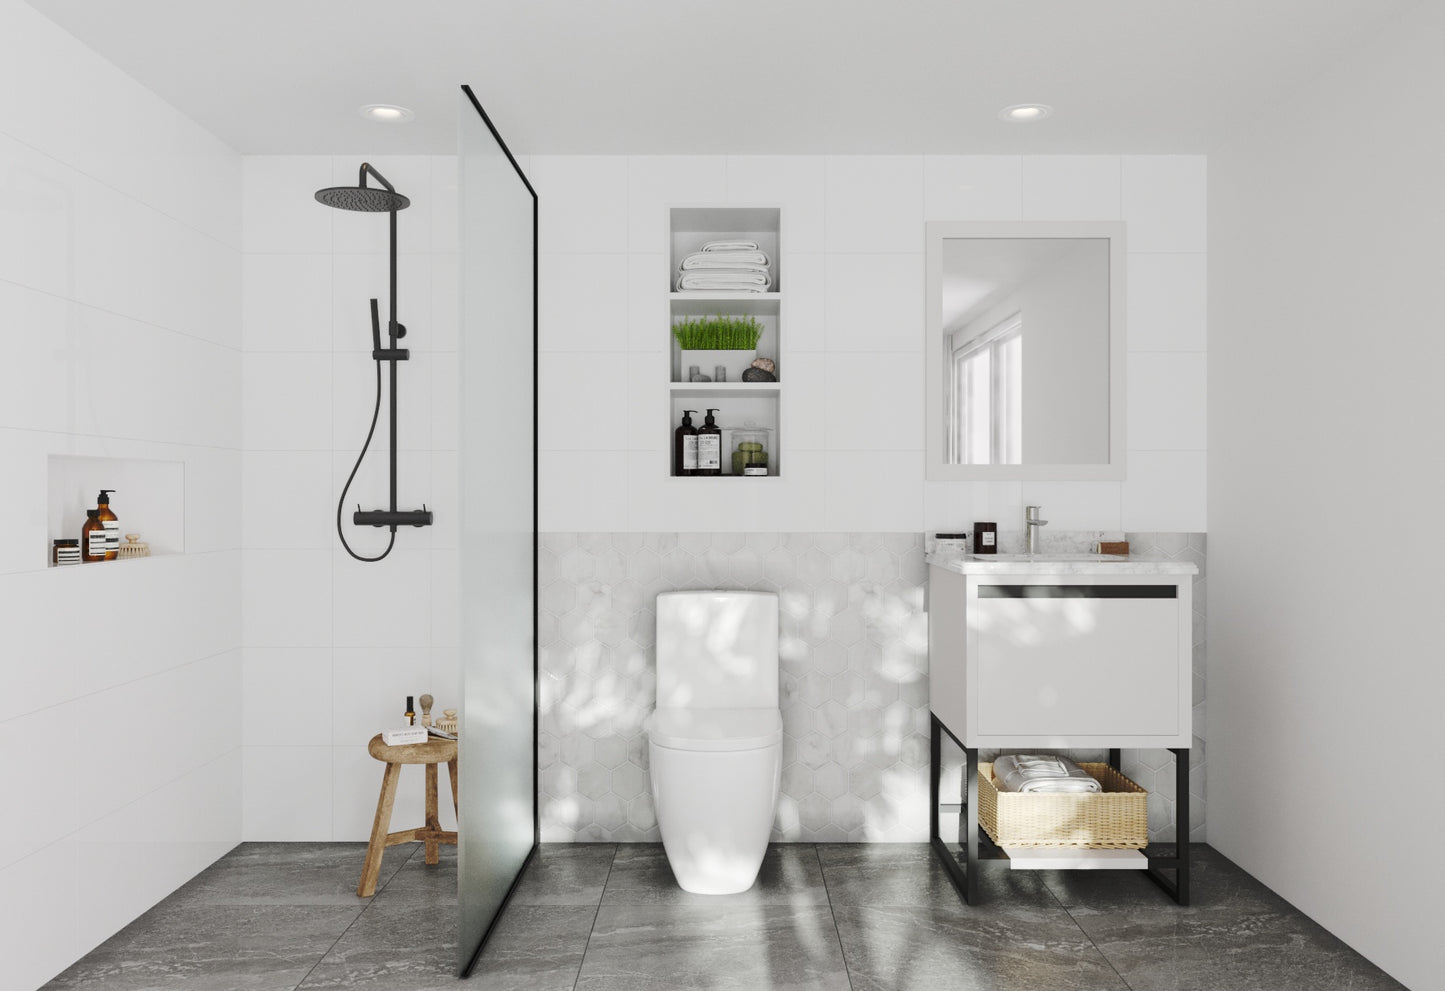 Alto 24" White Bathroom Vanity with White Carrara Marble Countertop